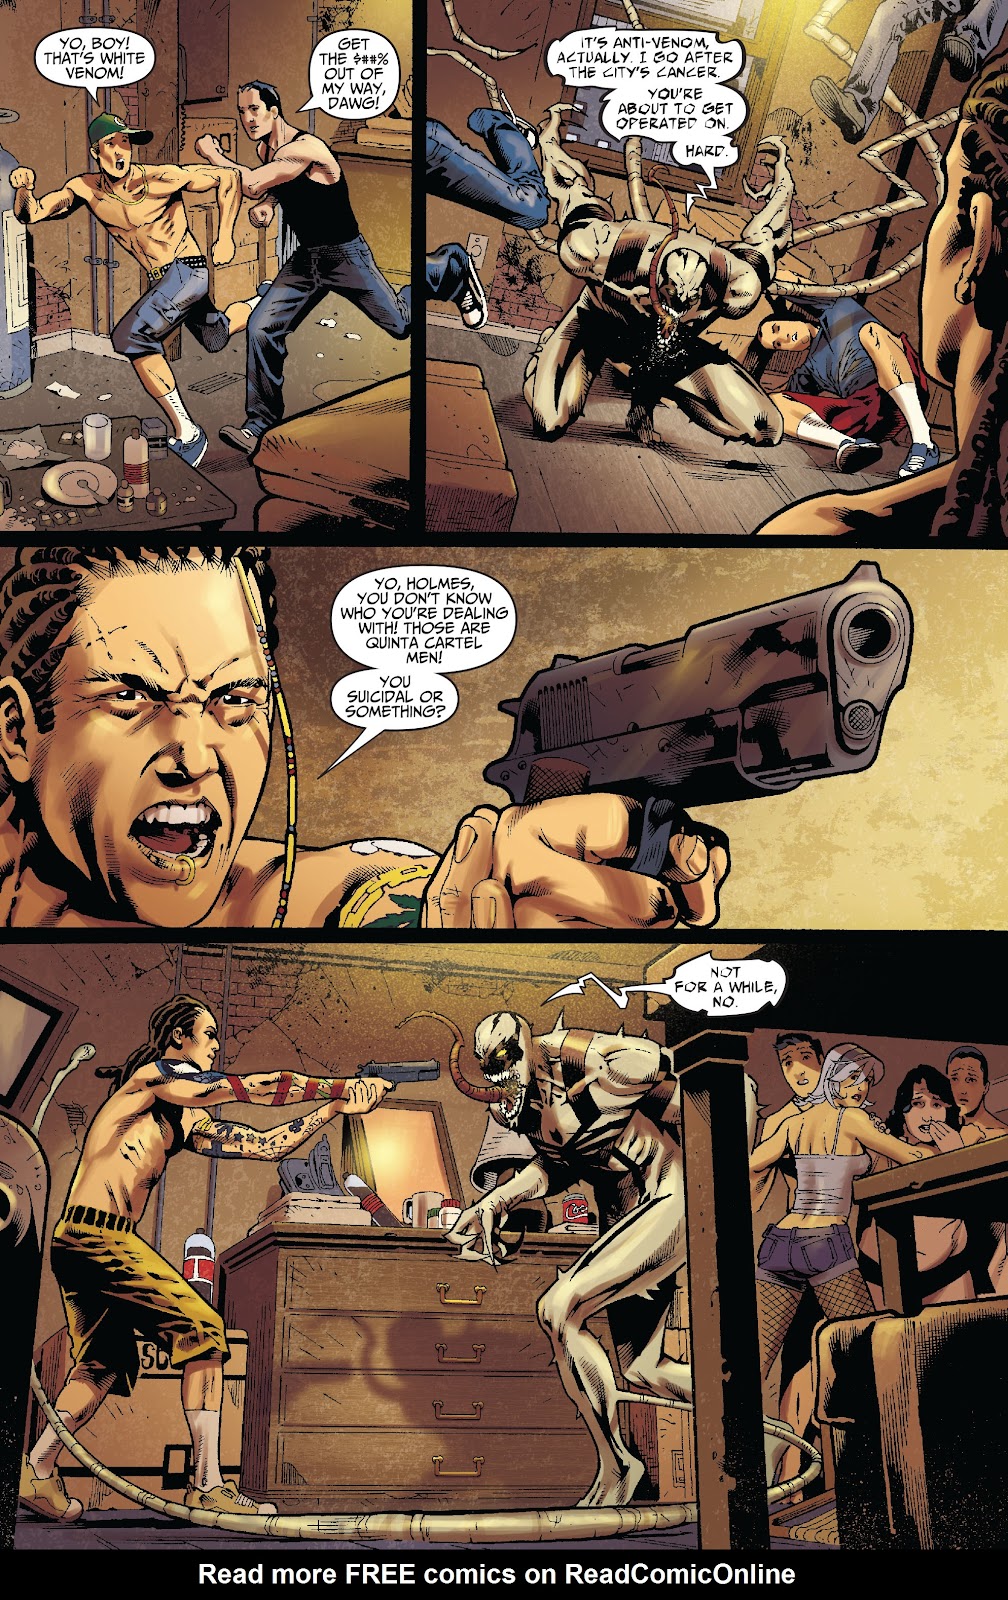 Amazing Spider-Man Presents: Anti-Venom - New Ways To Live issue 1 - Page 9